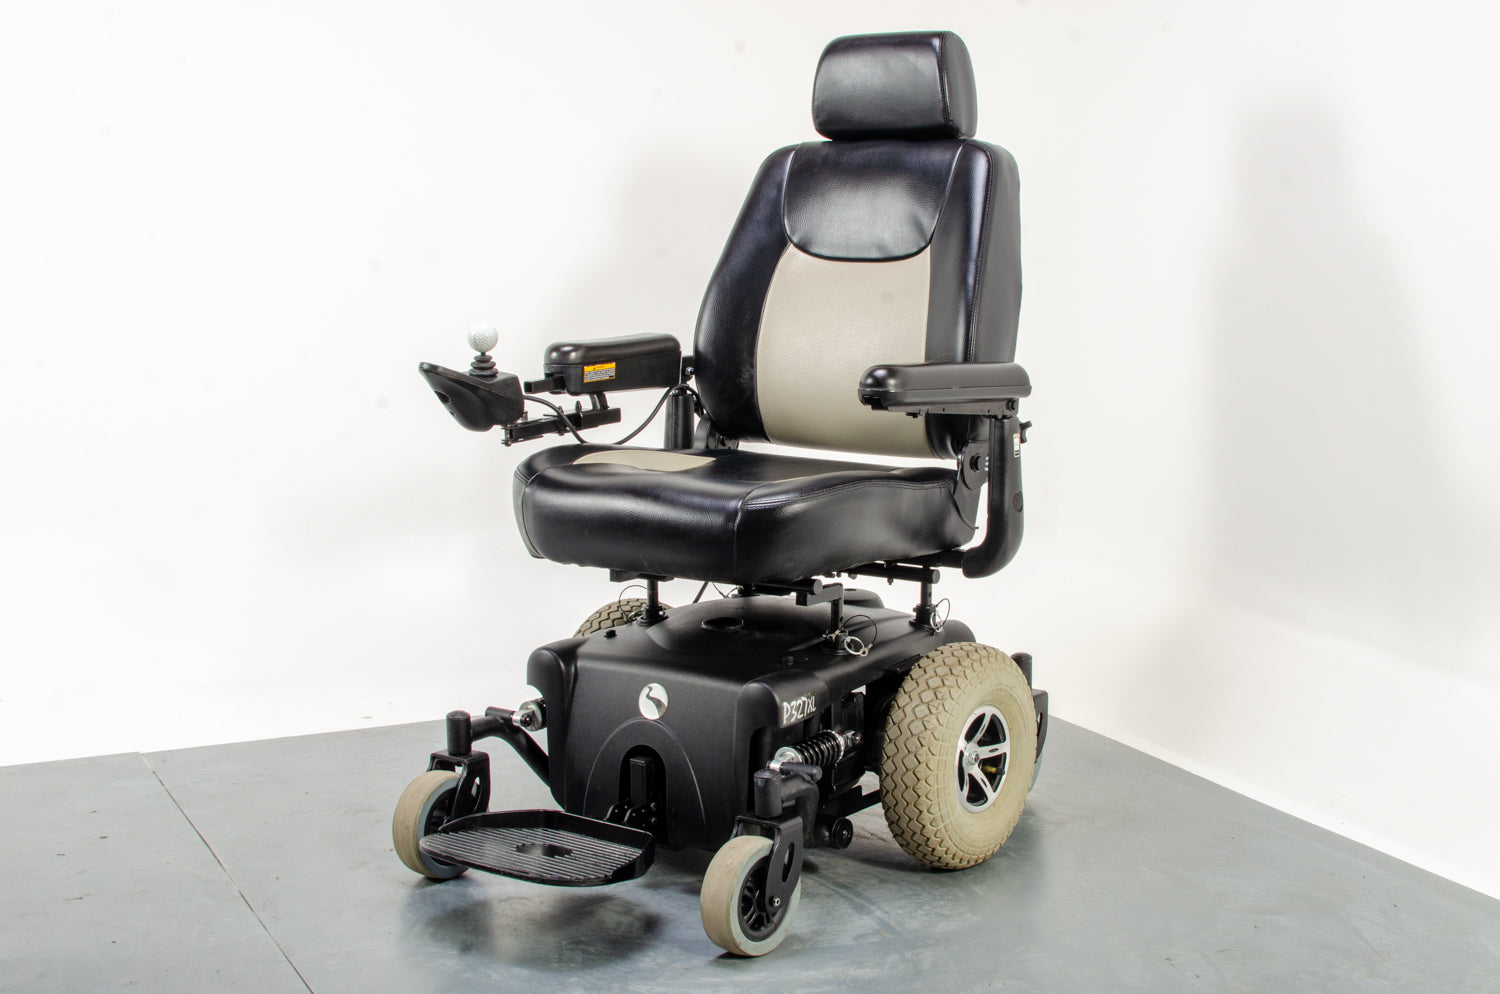 P327XL Used Powerchair Electric Mobility Wheelchair 32 Stone Bariatric Heavy-Duty